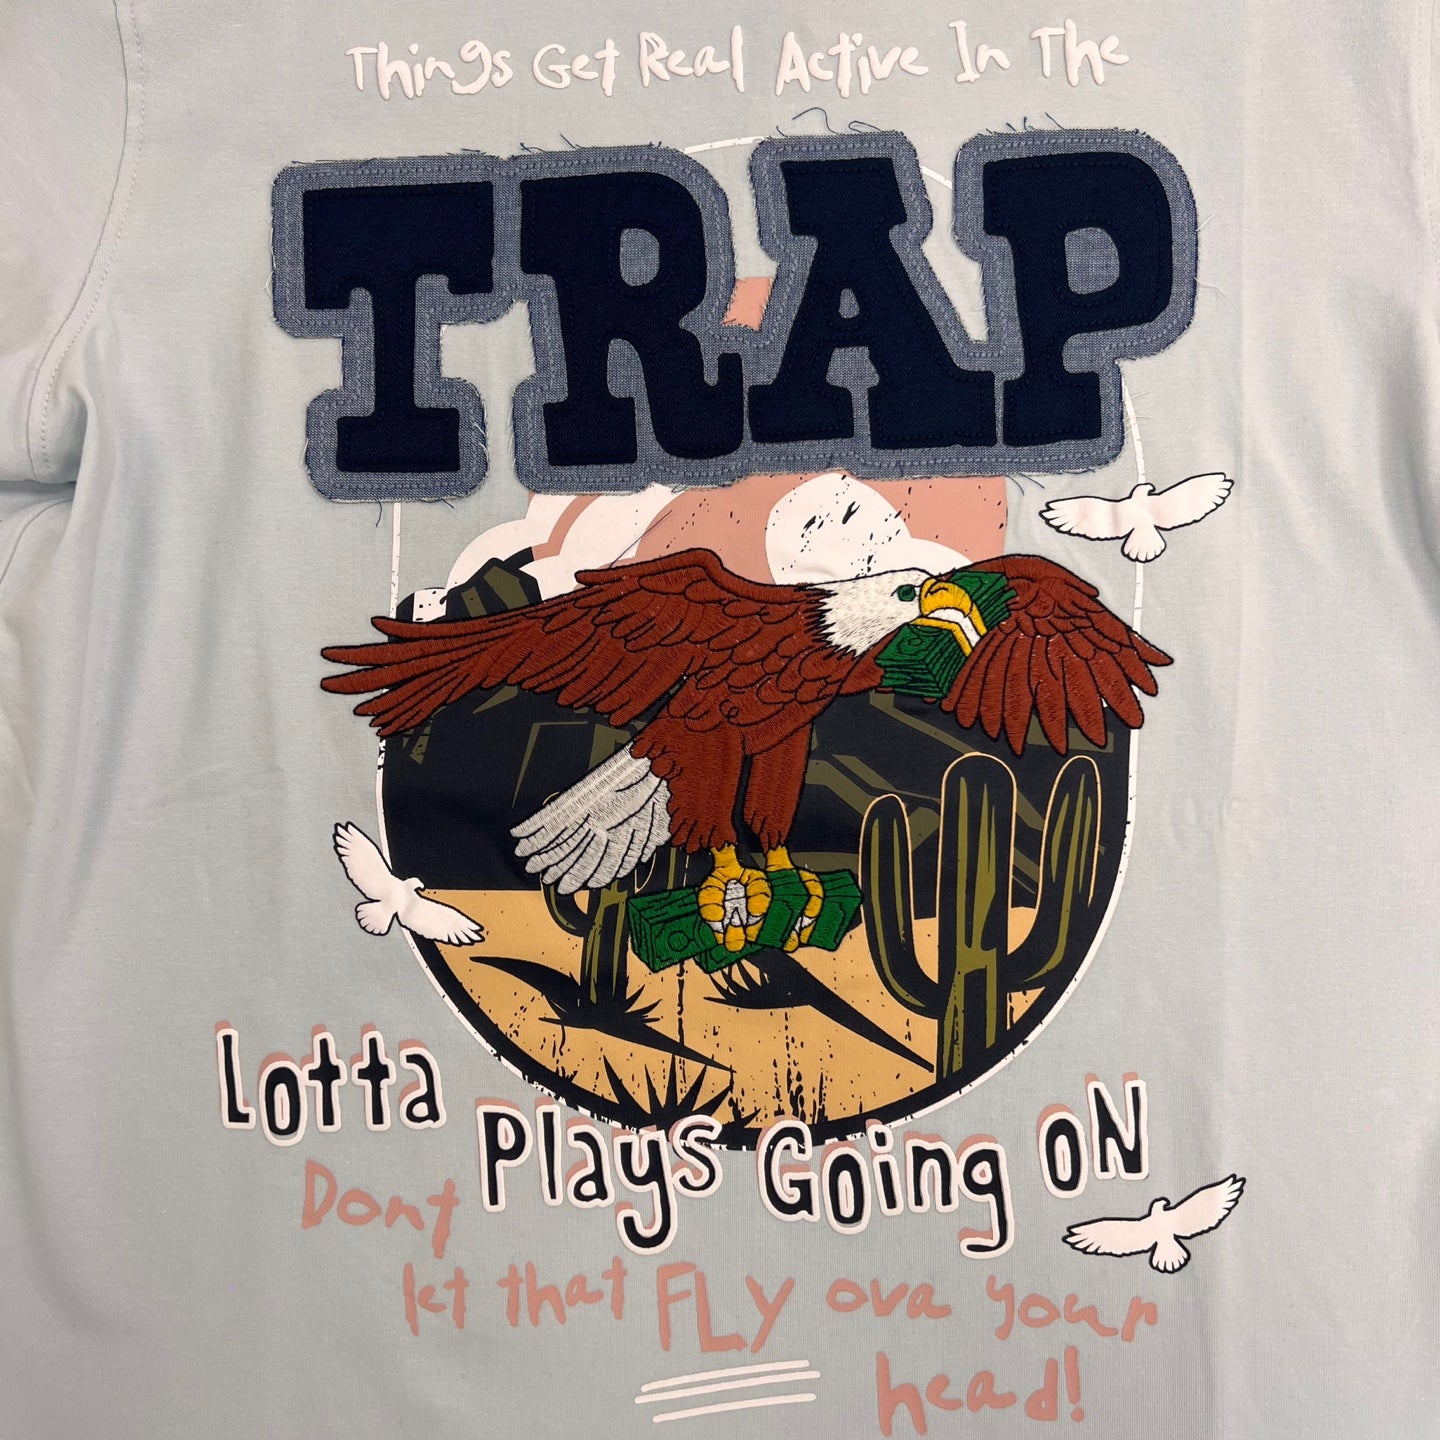 SMOKE RISE Trap Graphic Patch T-Shirt